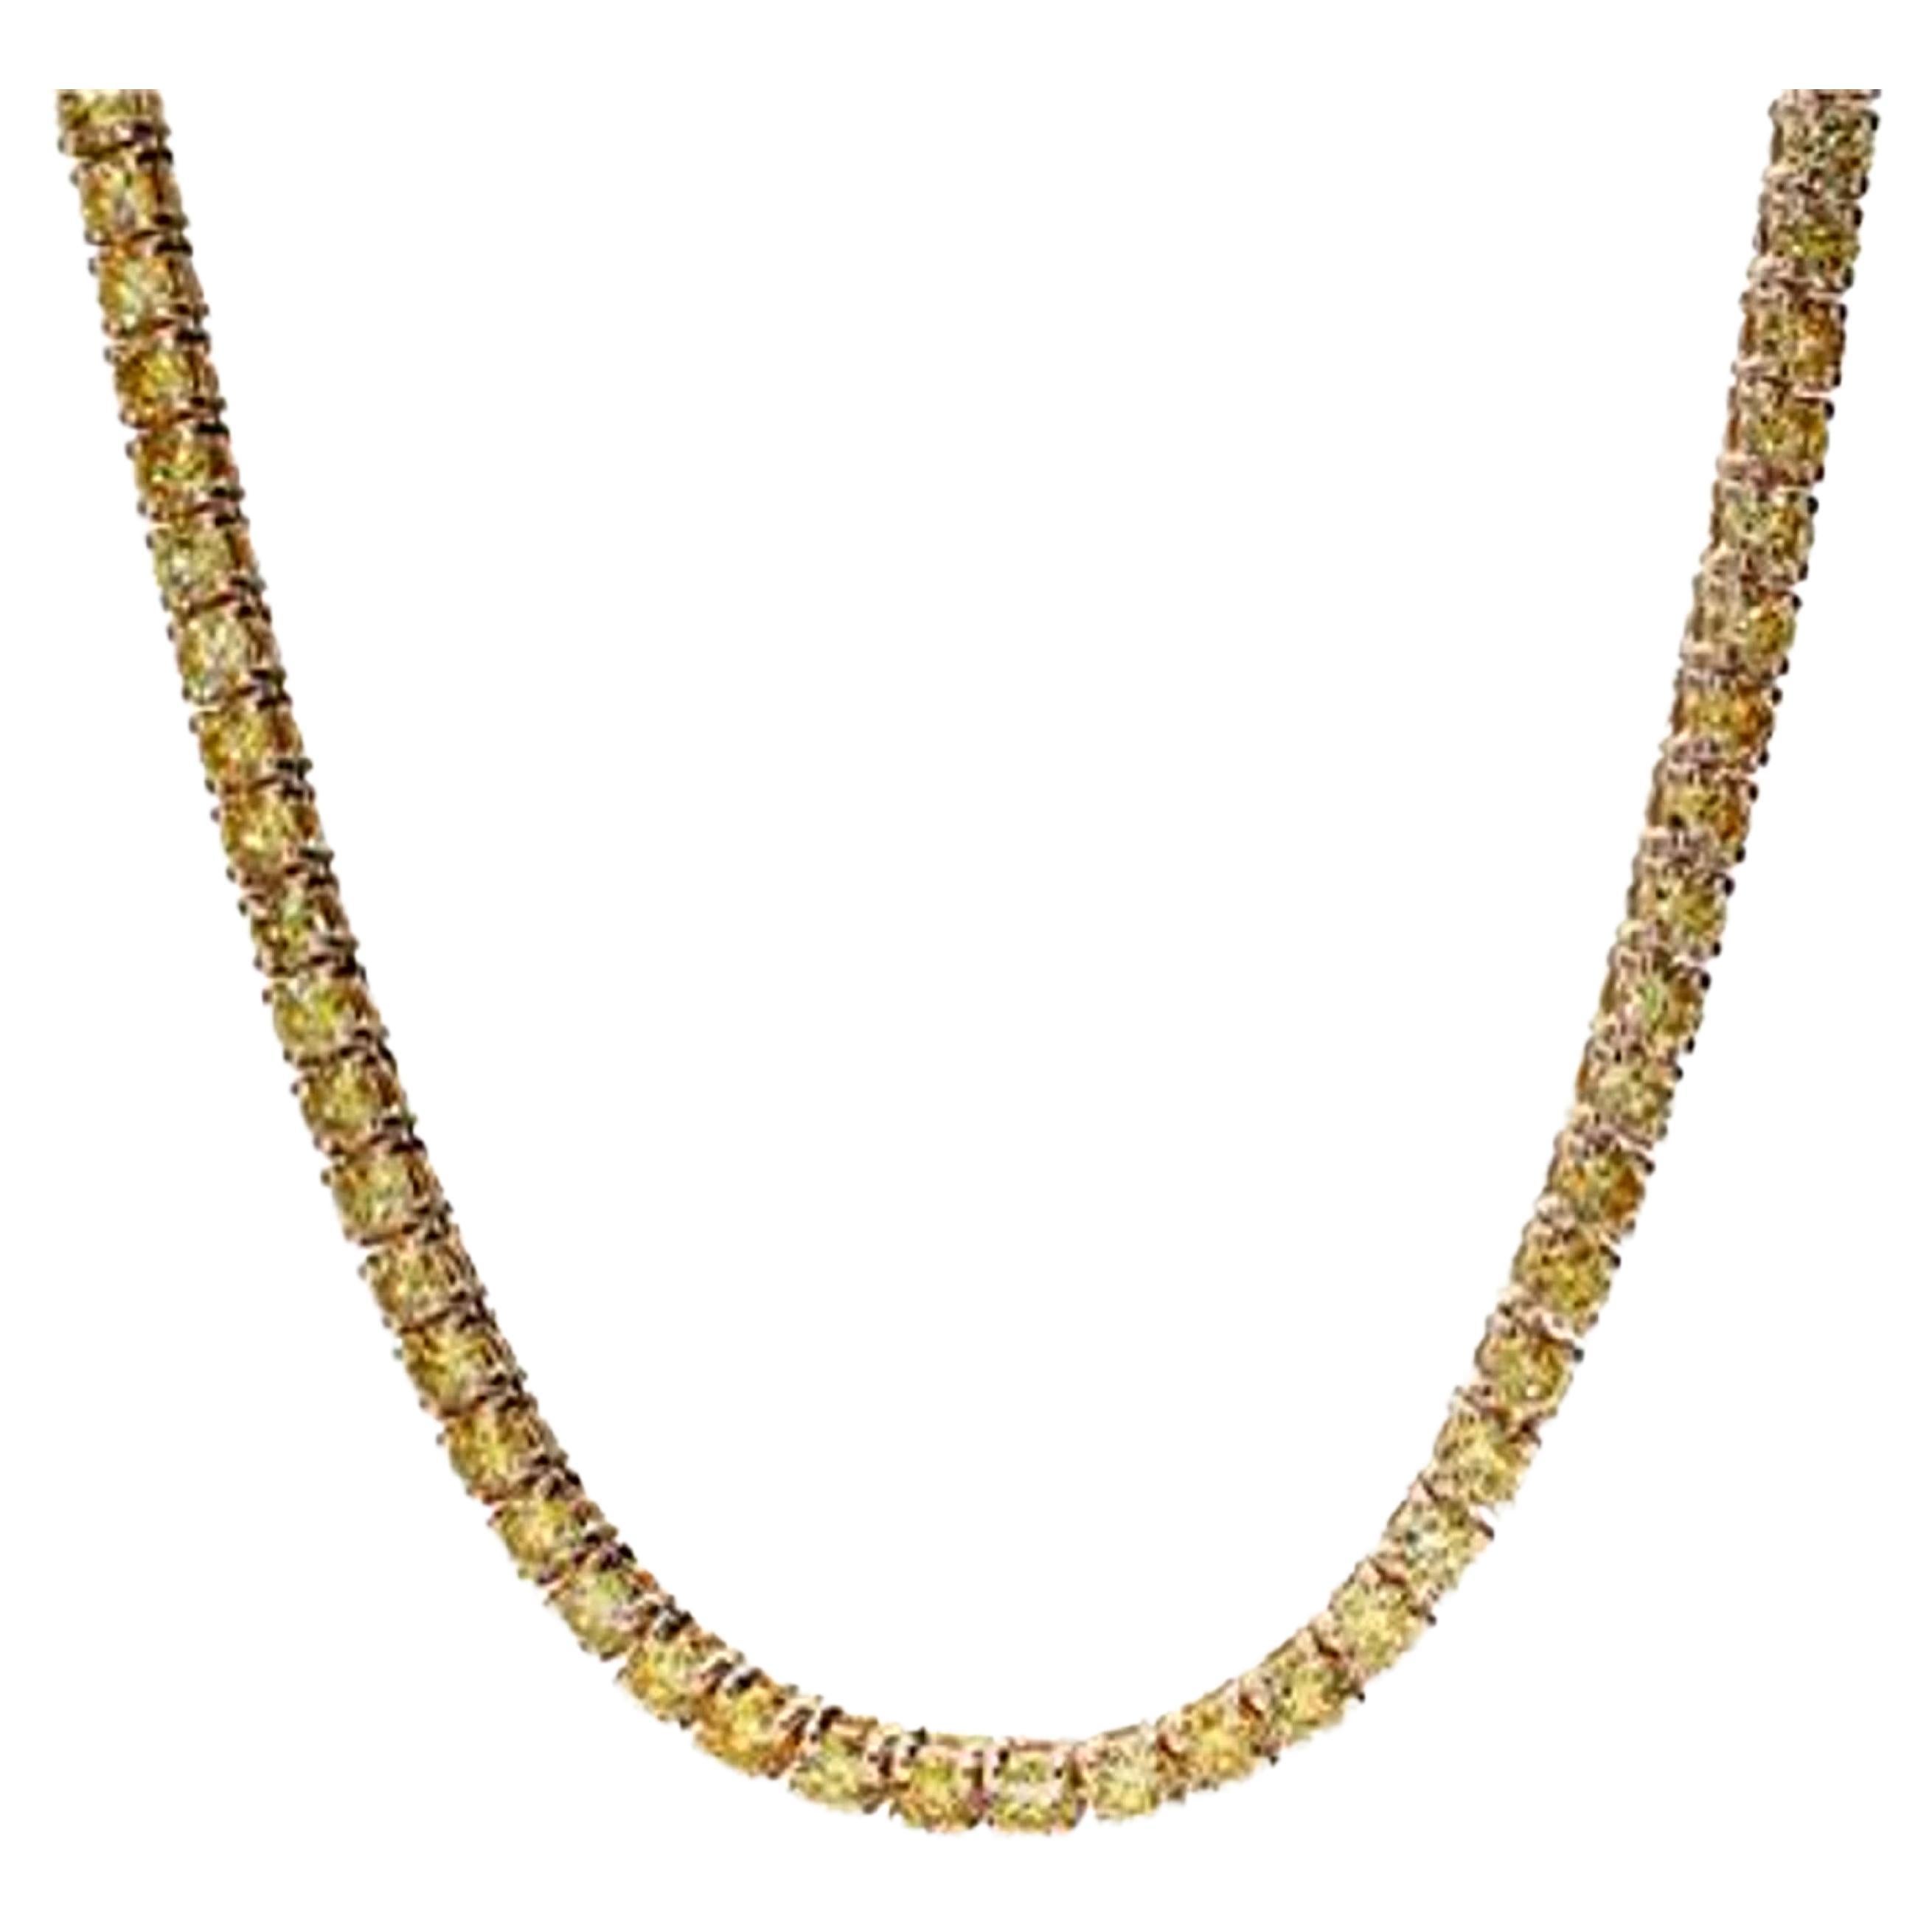 Natural Yellow Round Diamond 9.51 Carat TW Yellow Gold Necklace